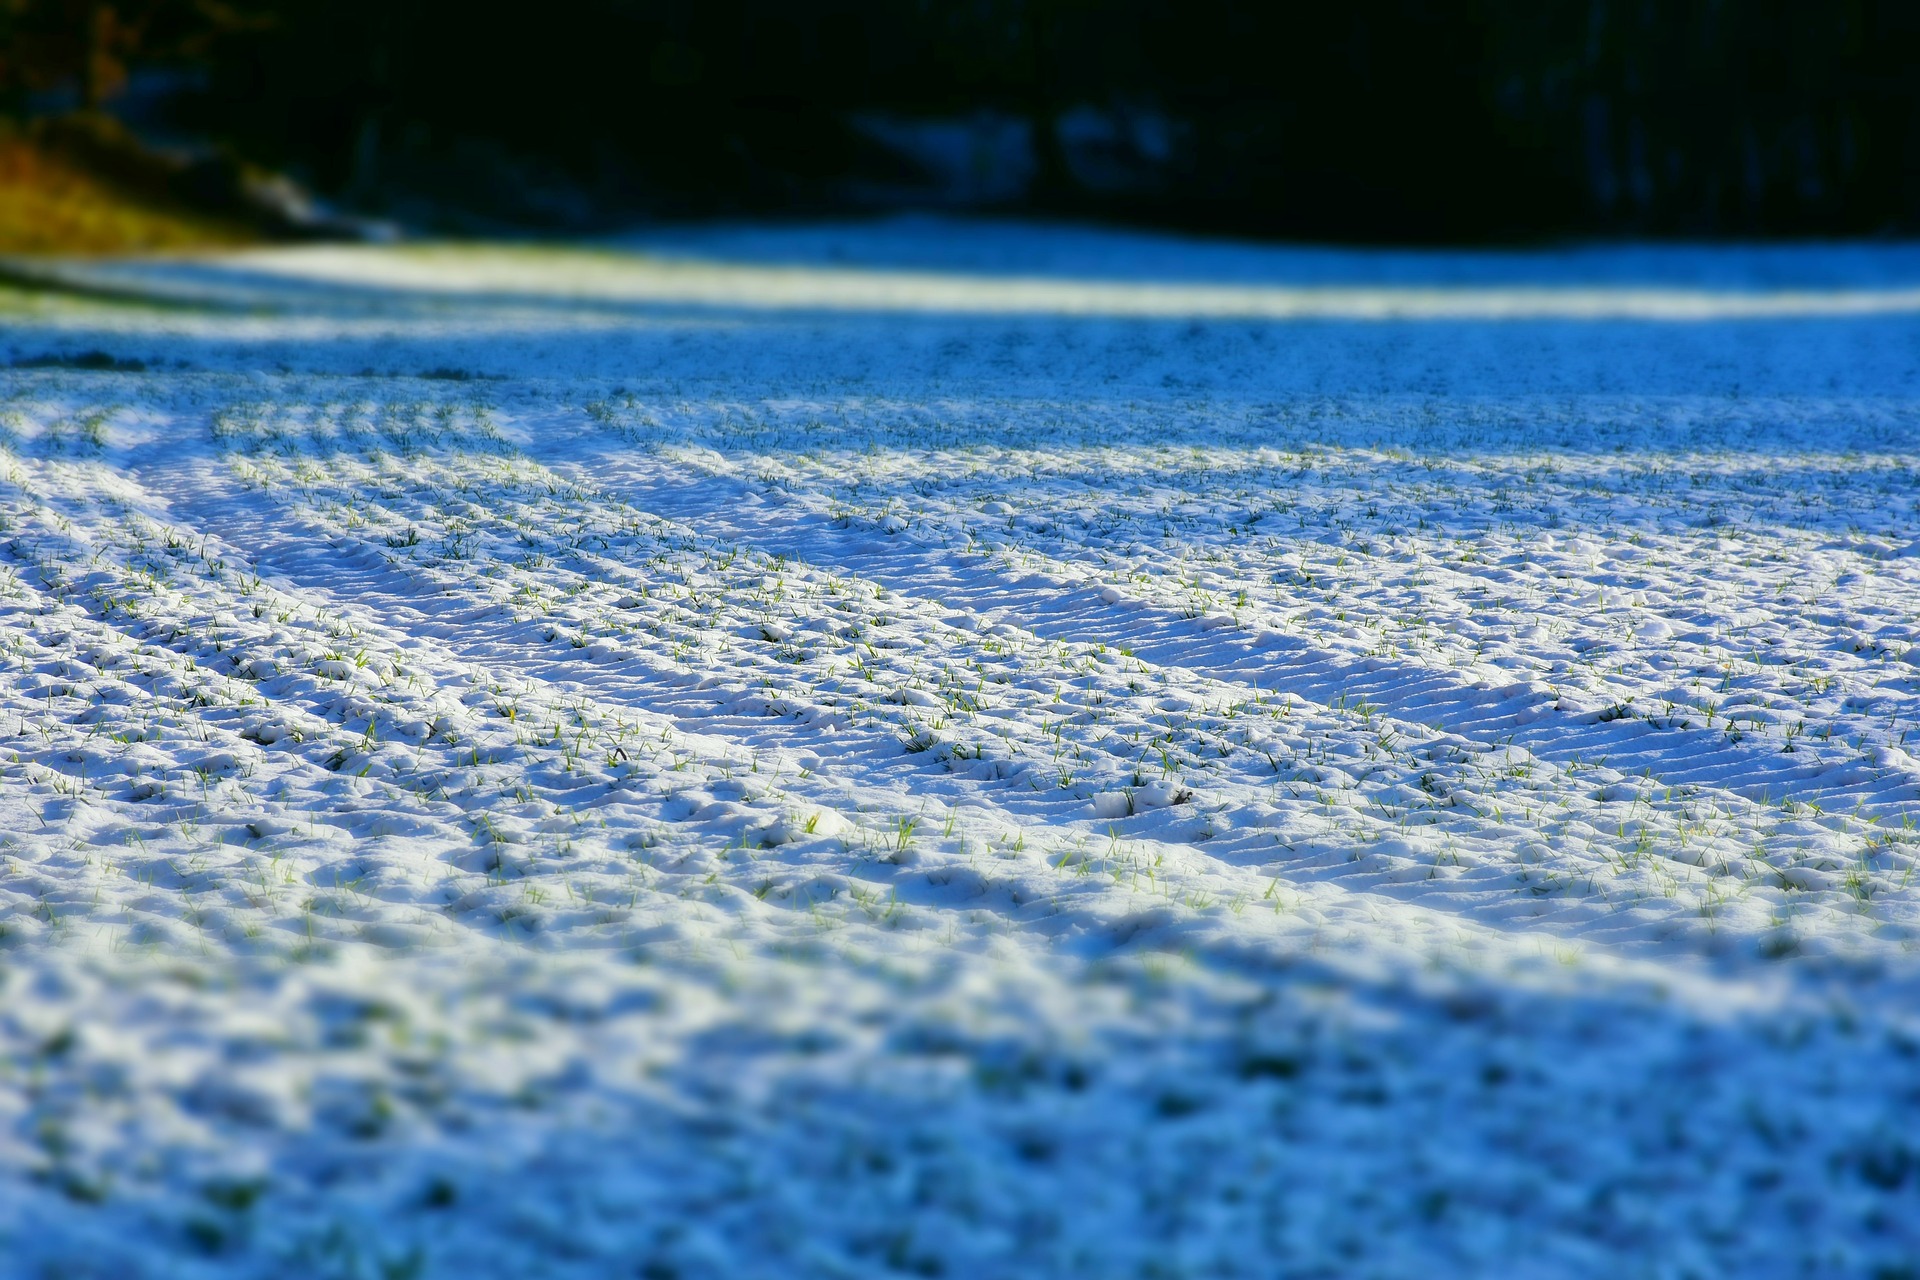 snow field